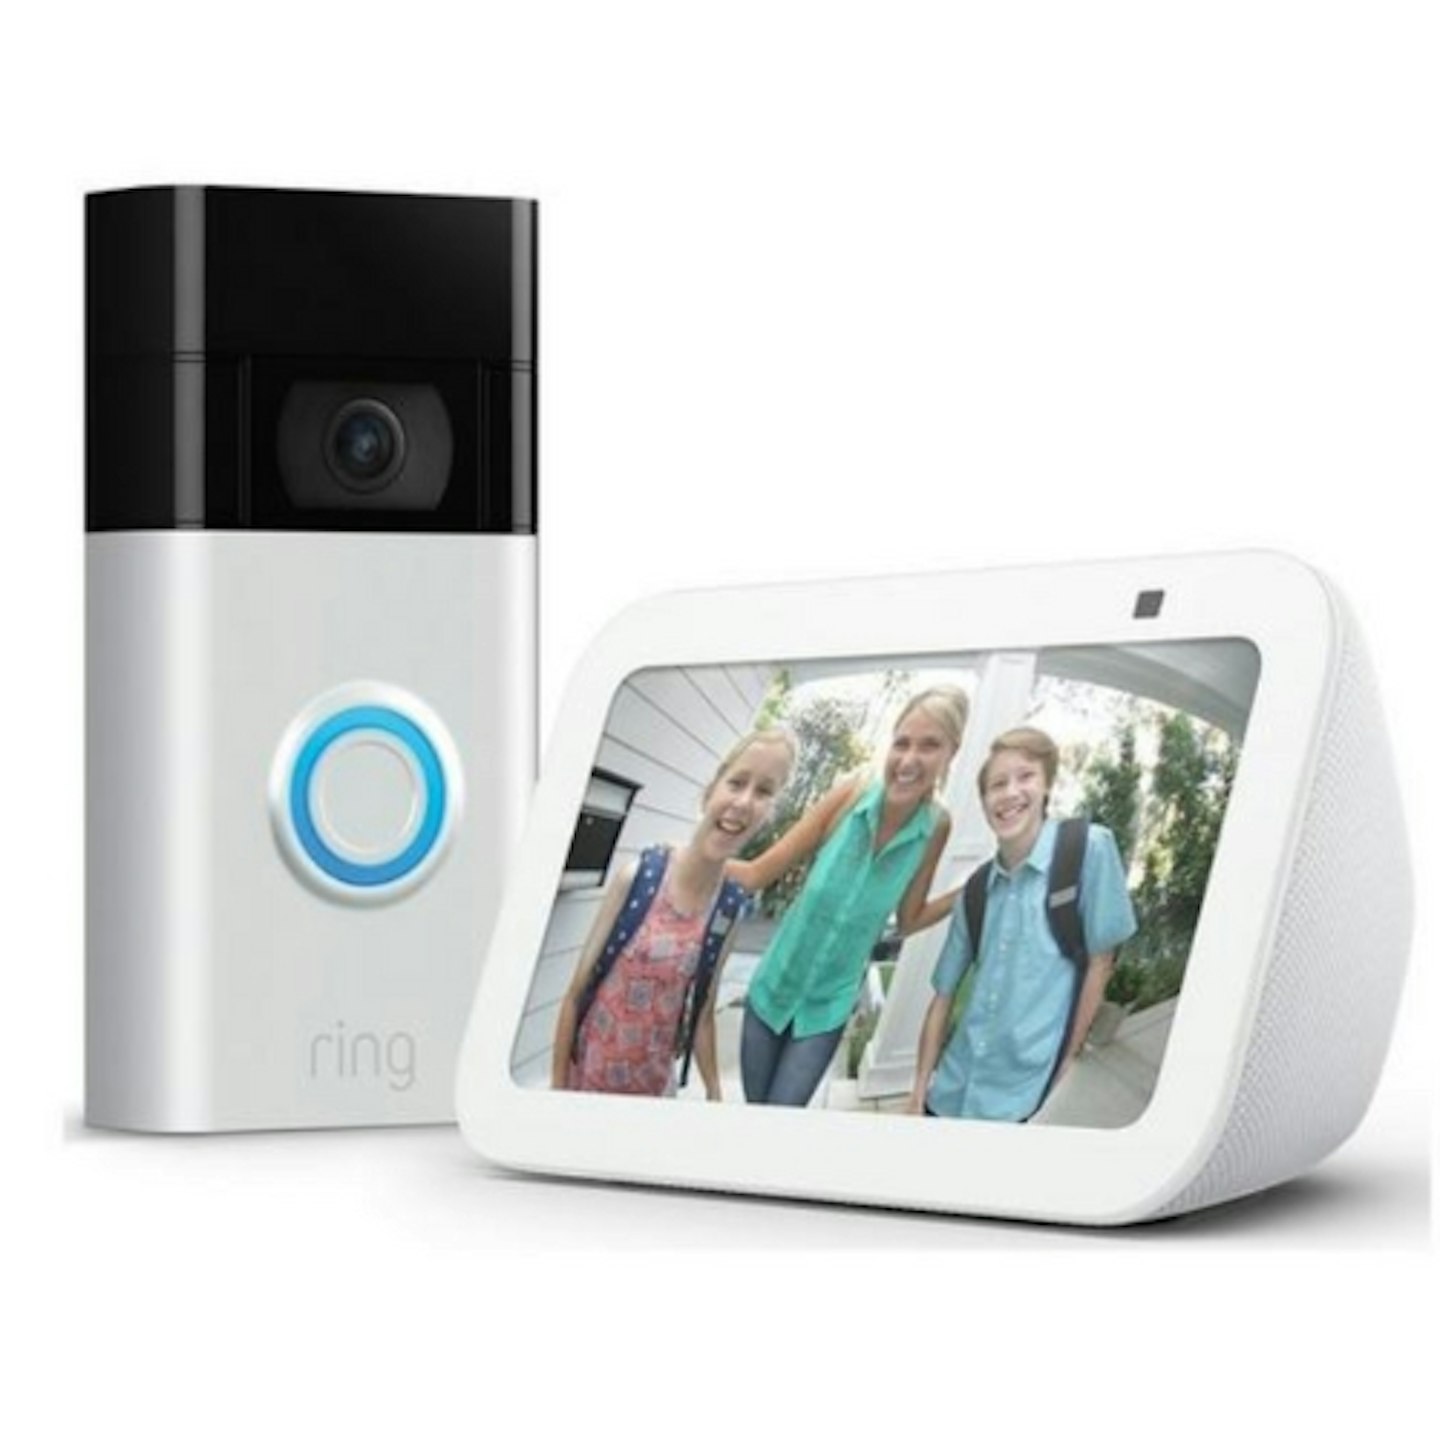 Ring Video Doorbell with Amazon Echo Show 5 Bundle